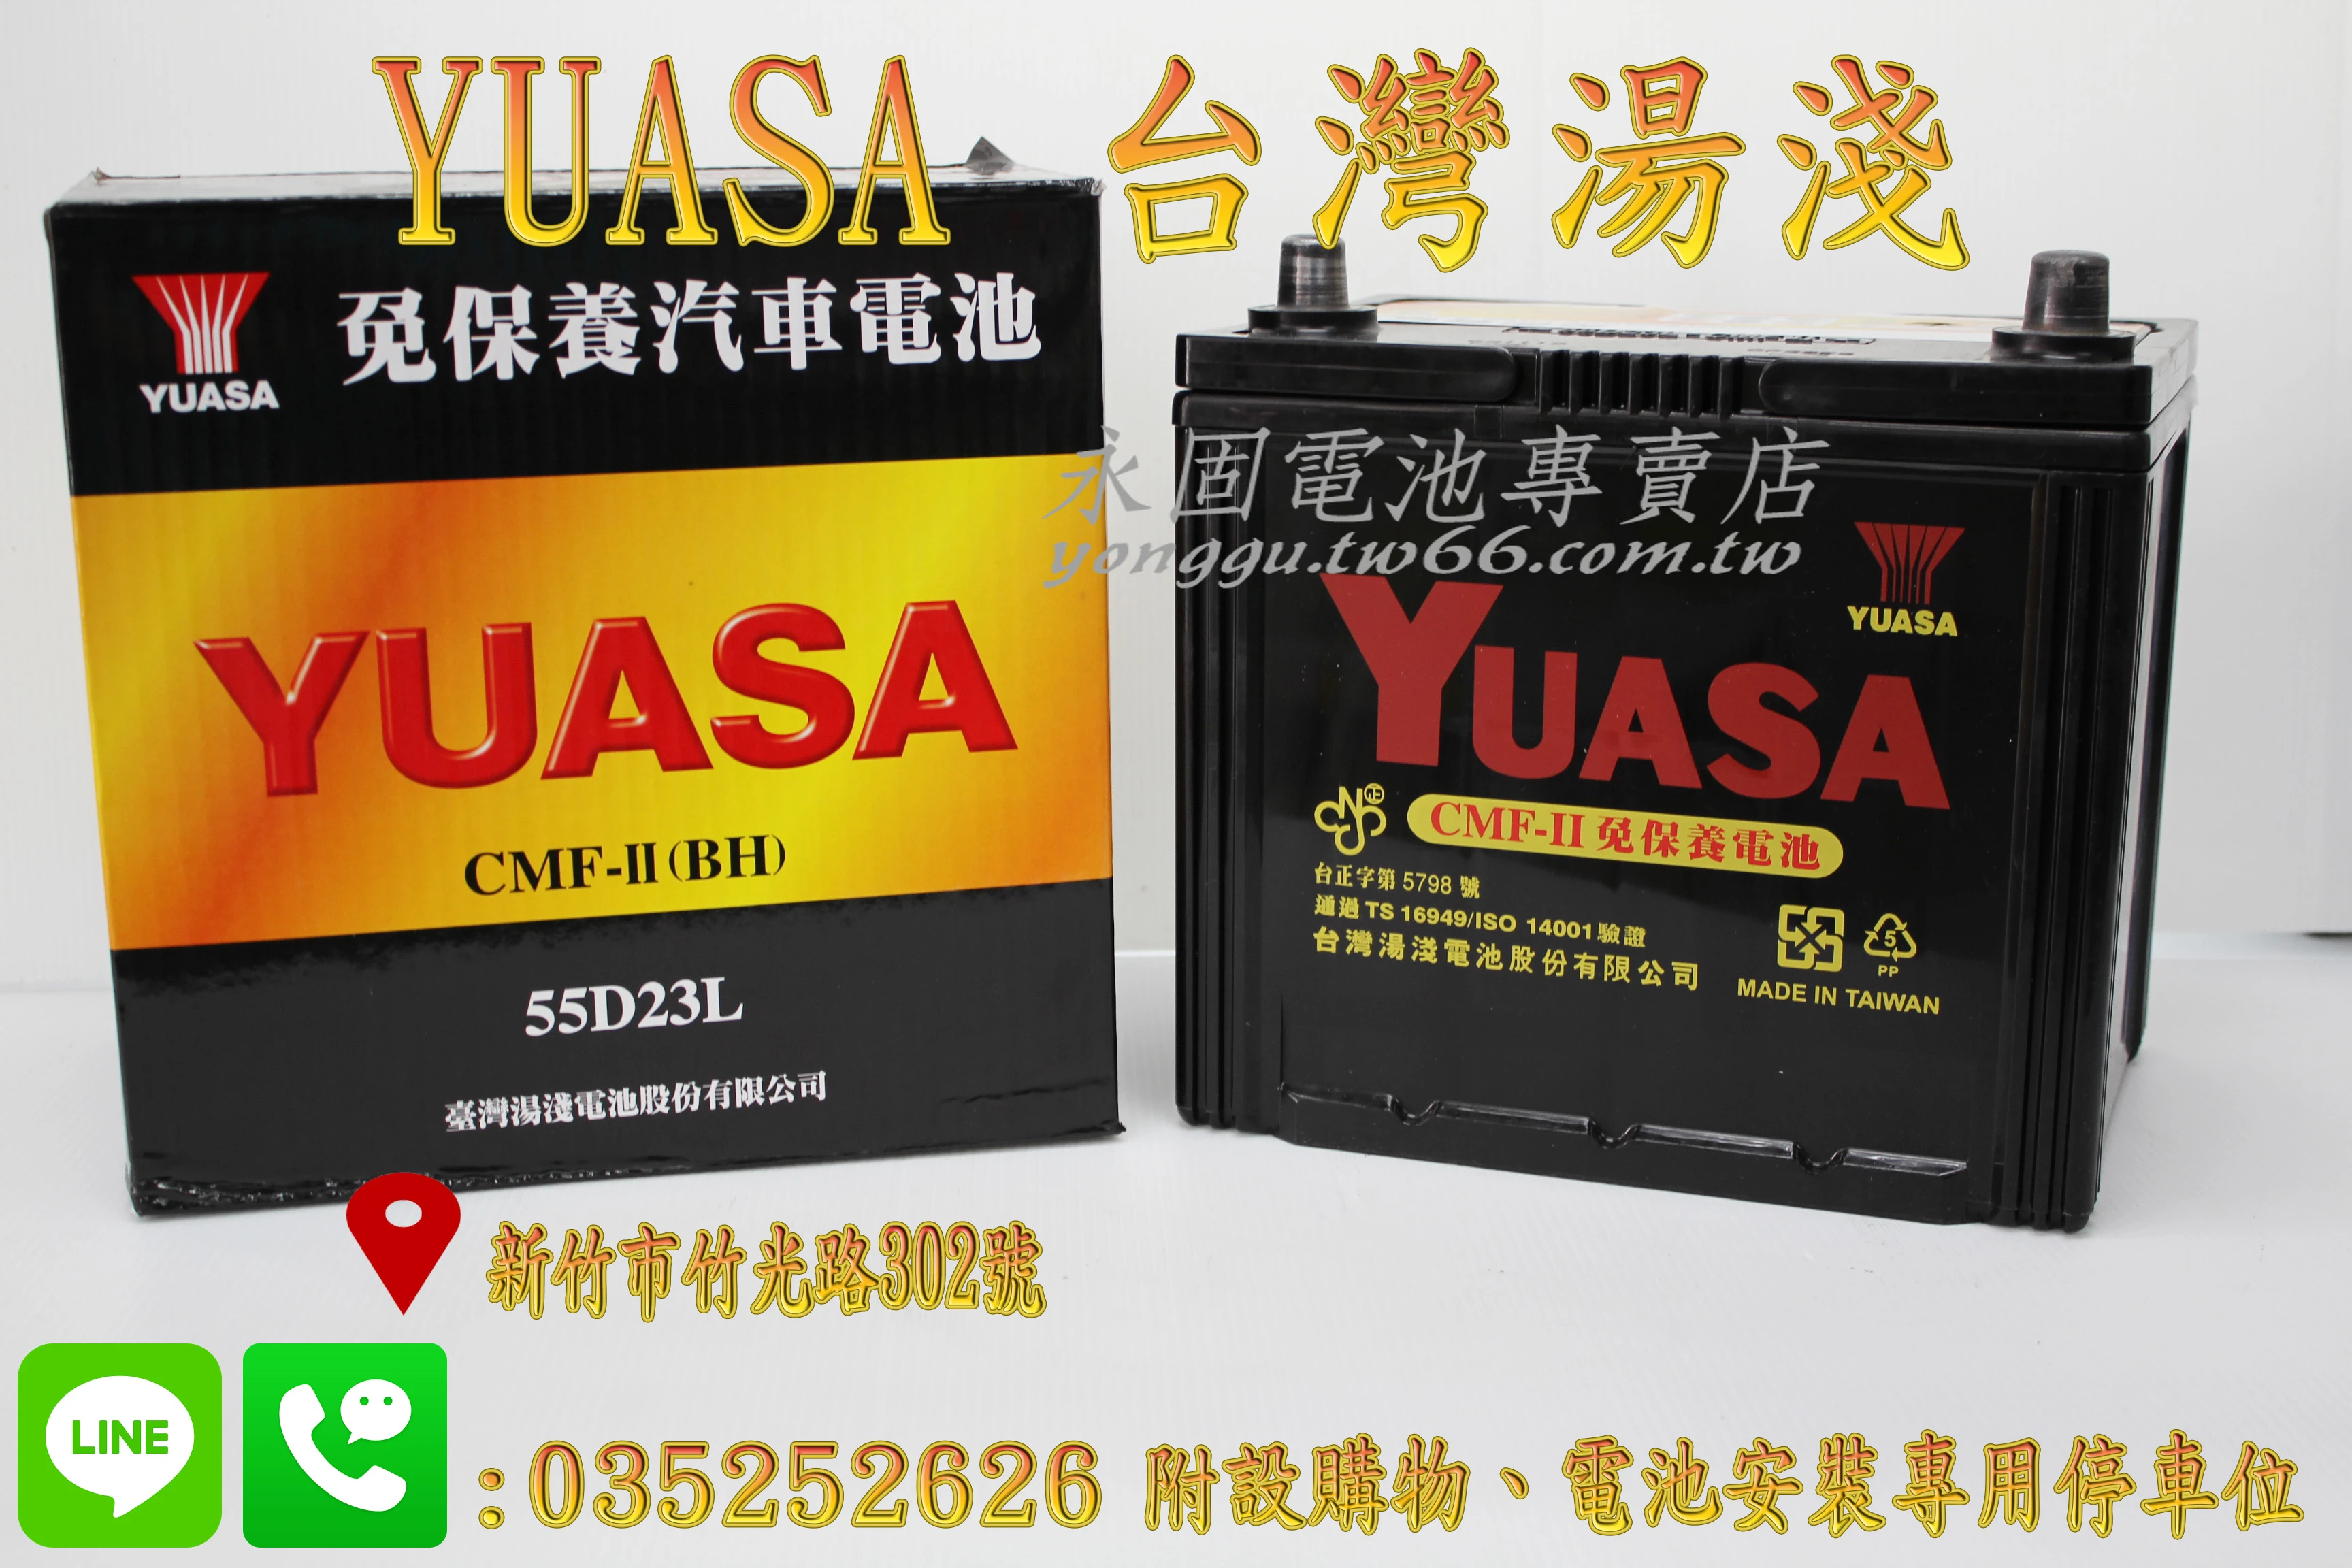 YUASA 湯淺 55D23L 國產 永固電池